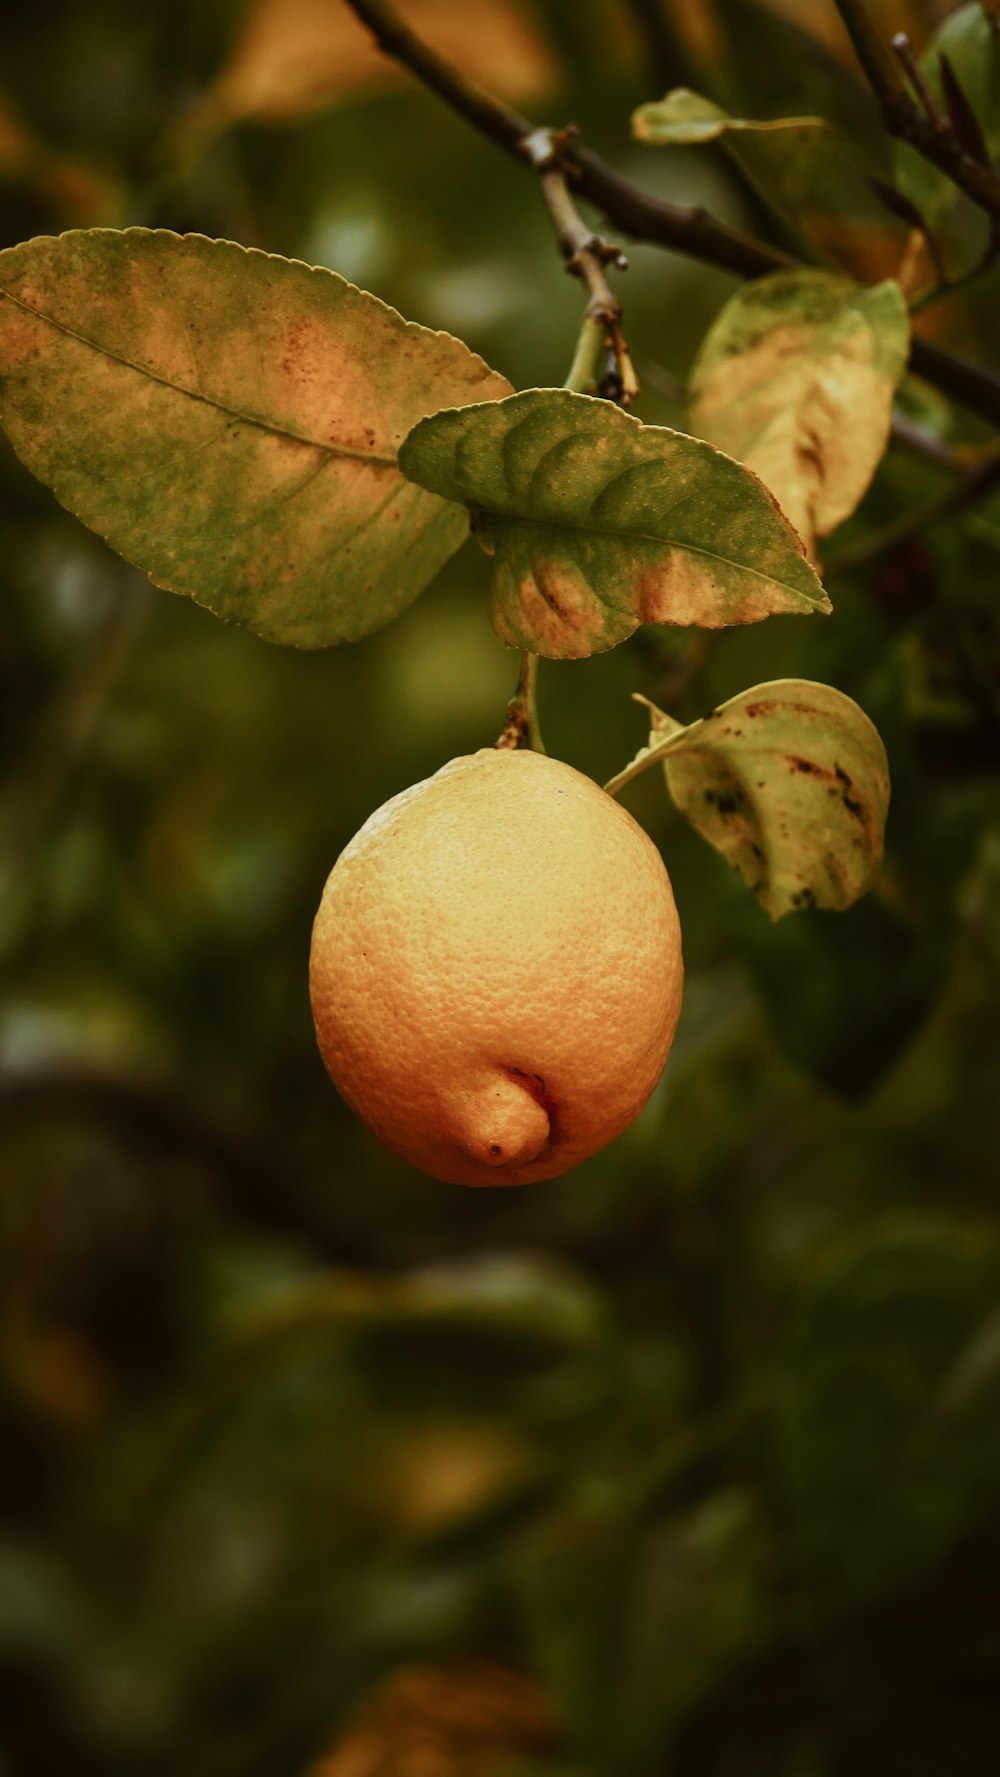 orange fruit growing on tree